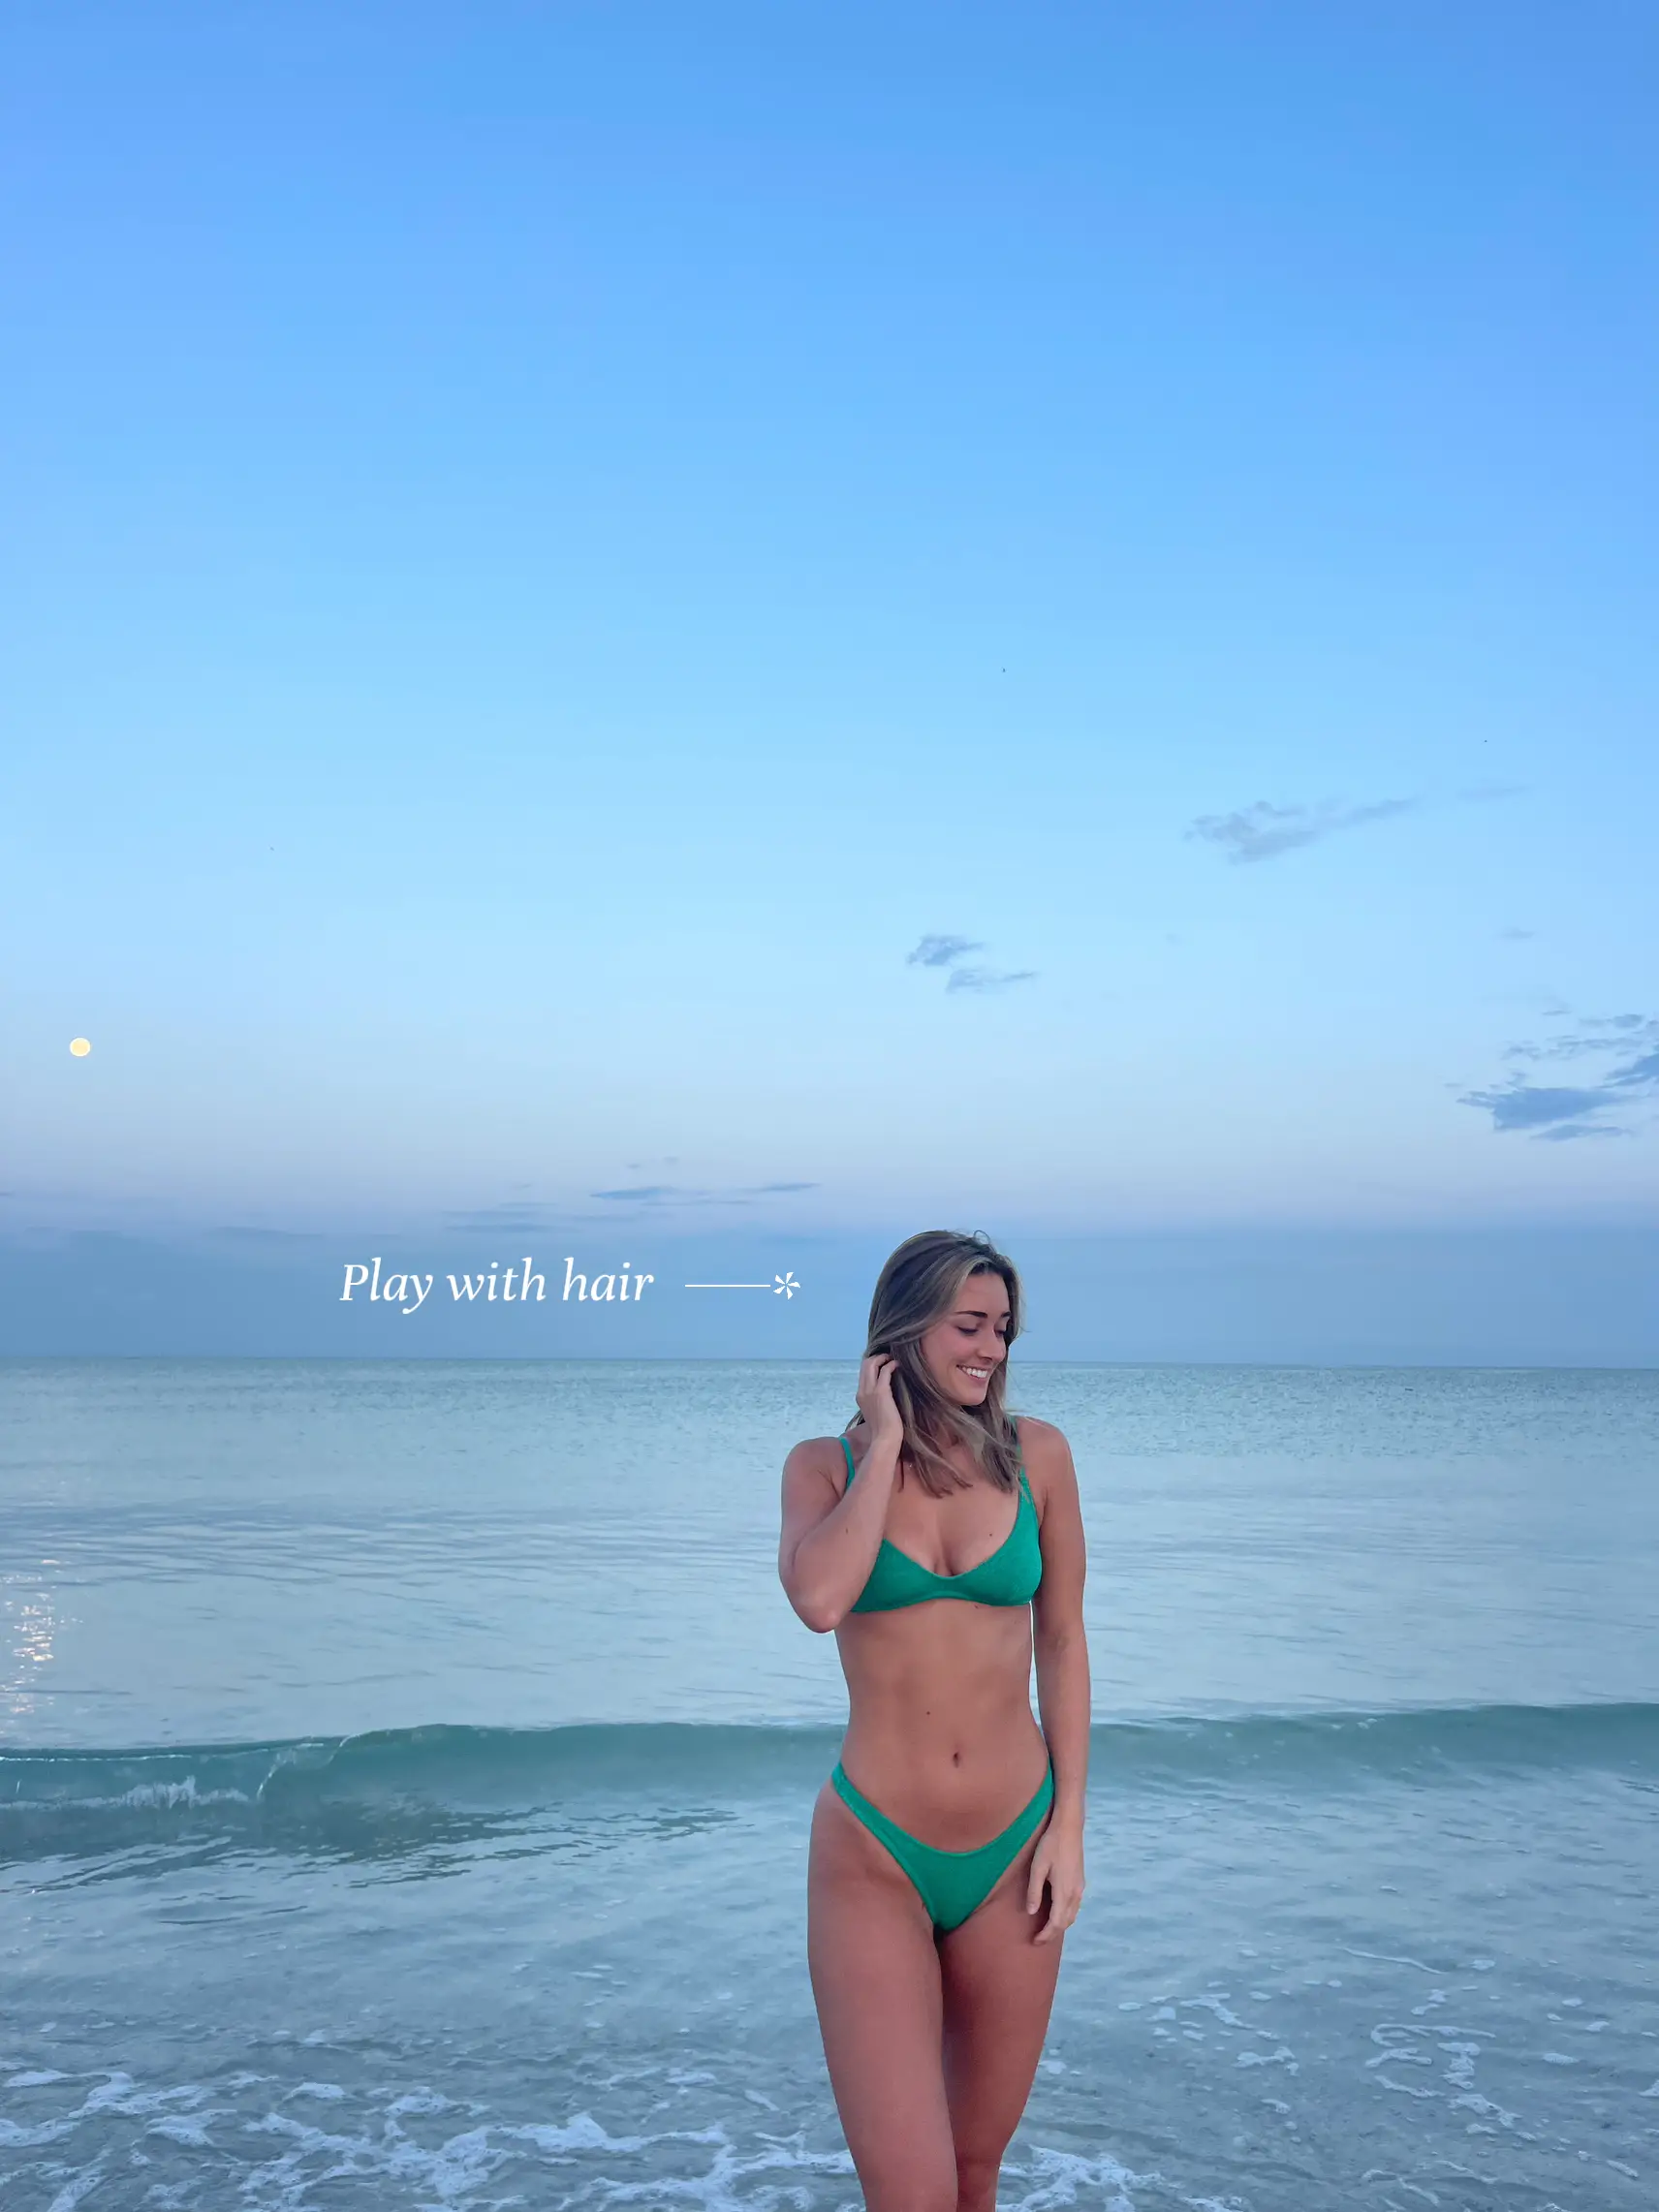  A woman in a green bikini is standing in the ocean.